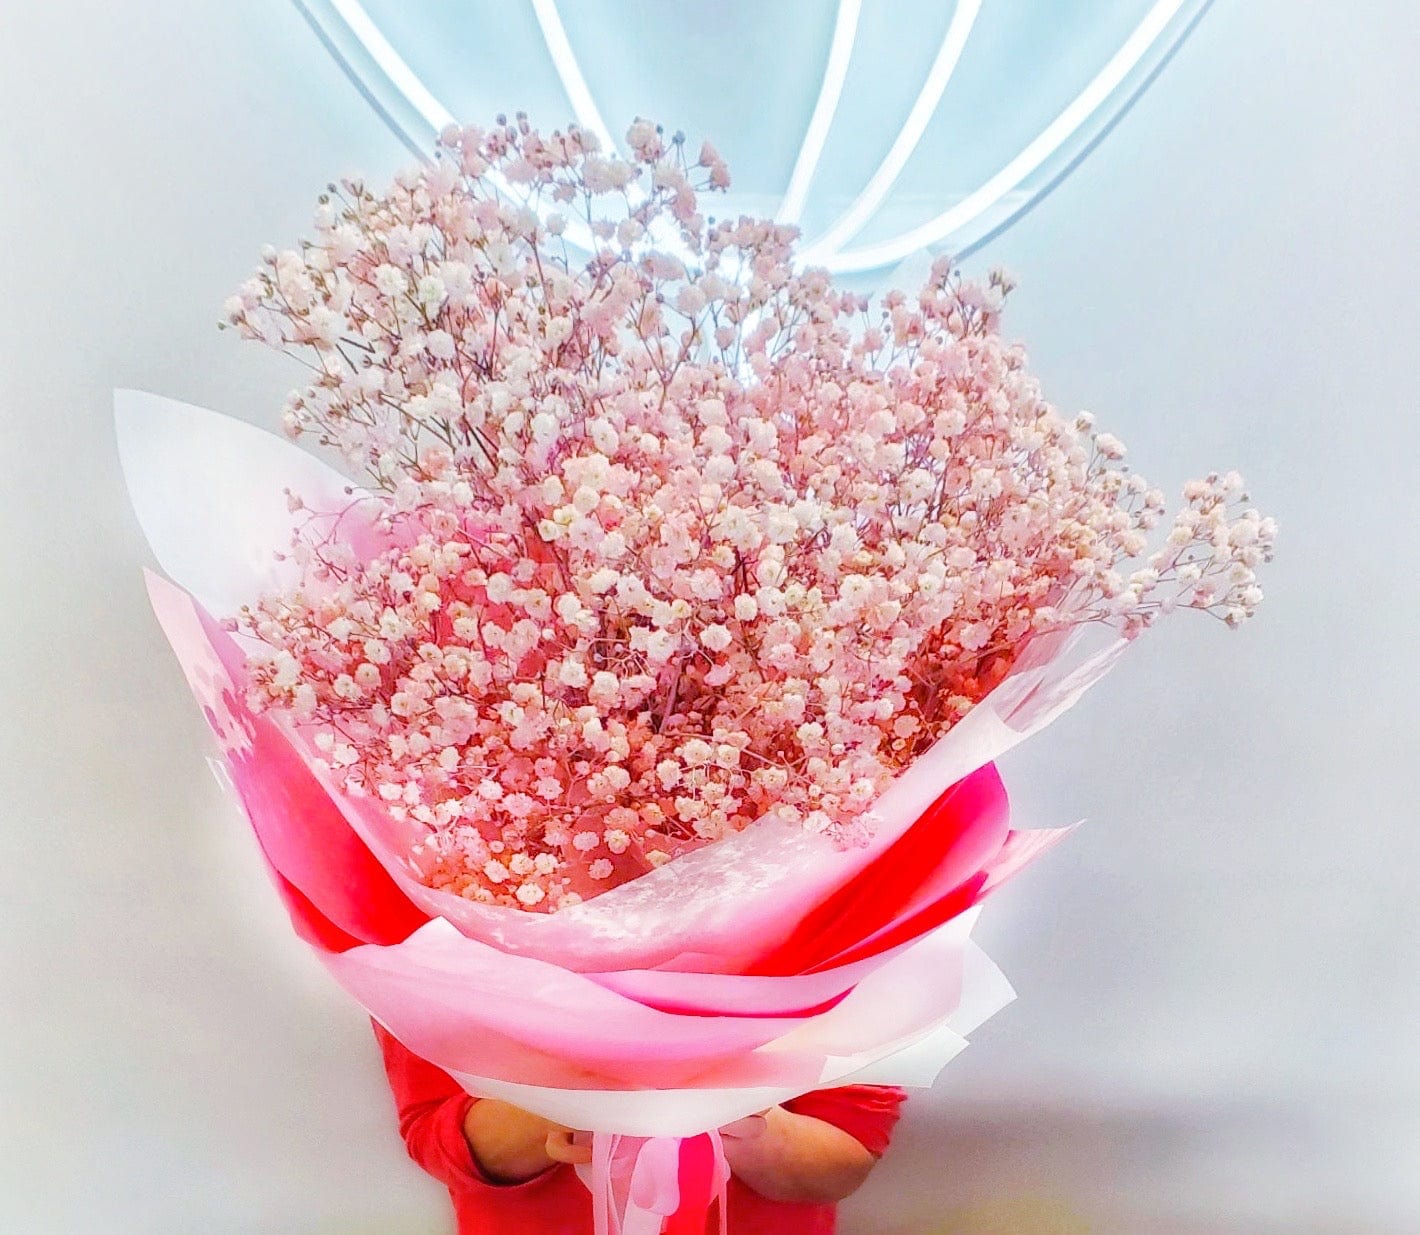 BLOOMHAUS MELBOURNE Flower arrangement Fairy Floss -Babies Breath Bouquet with Glitter Option